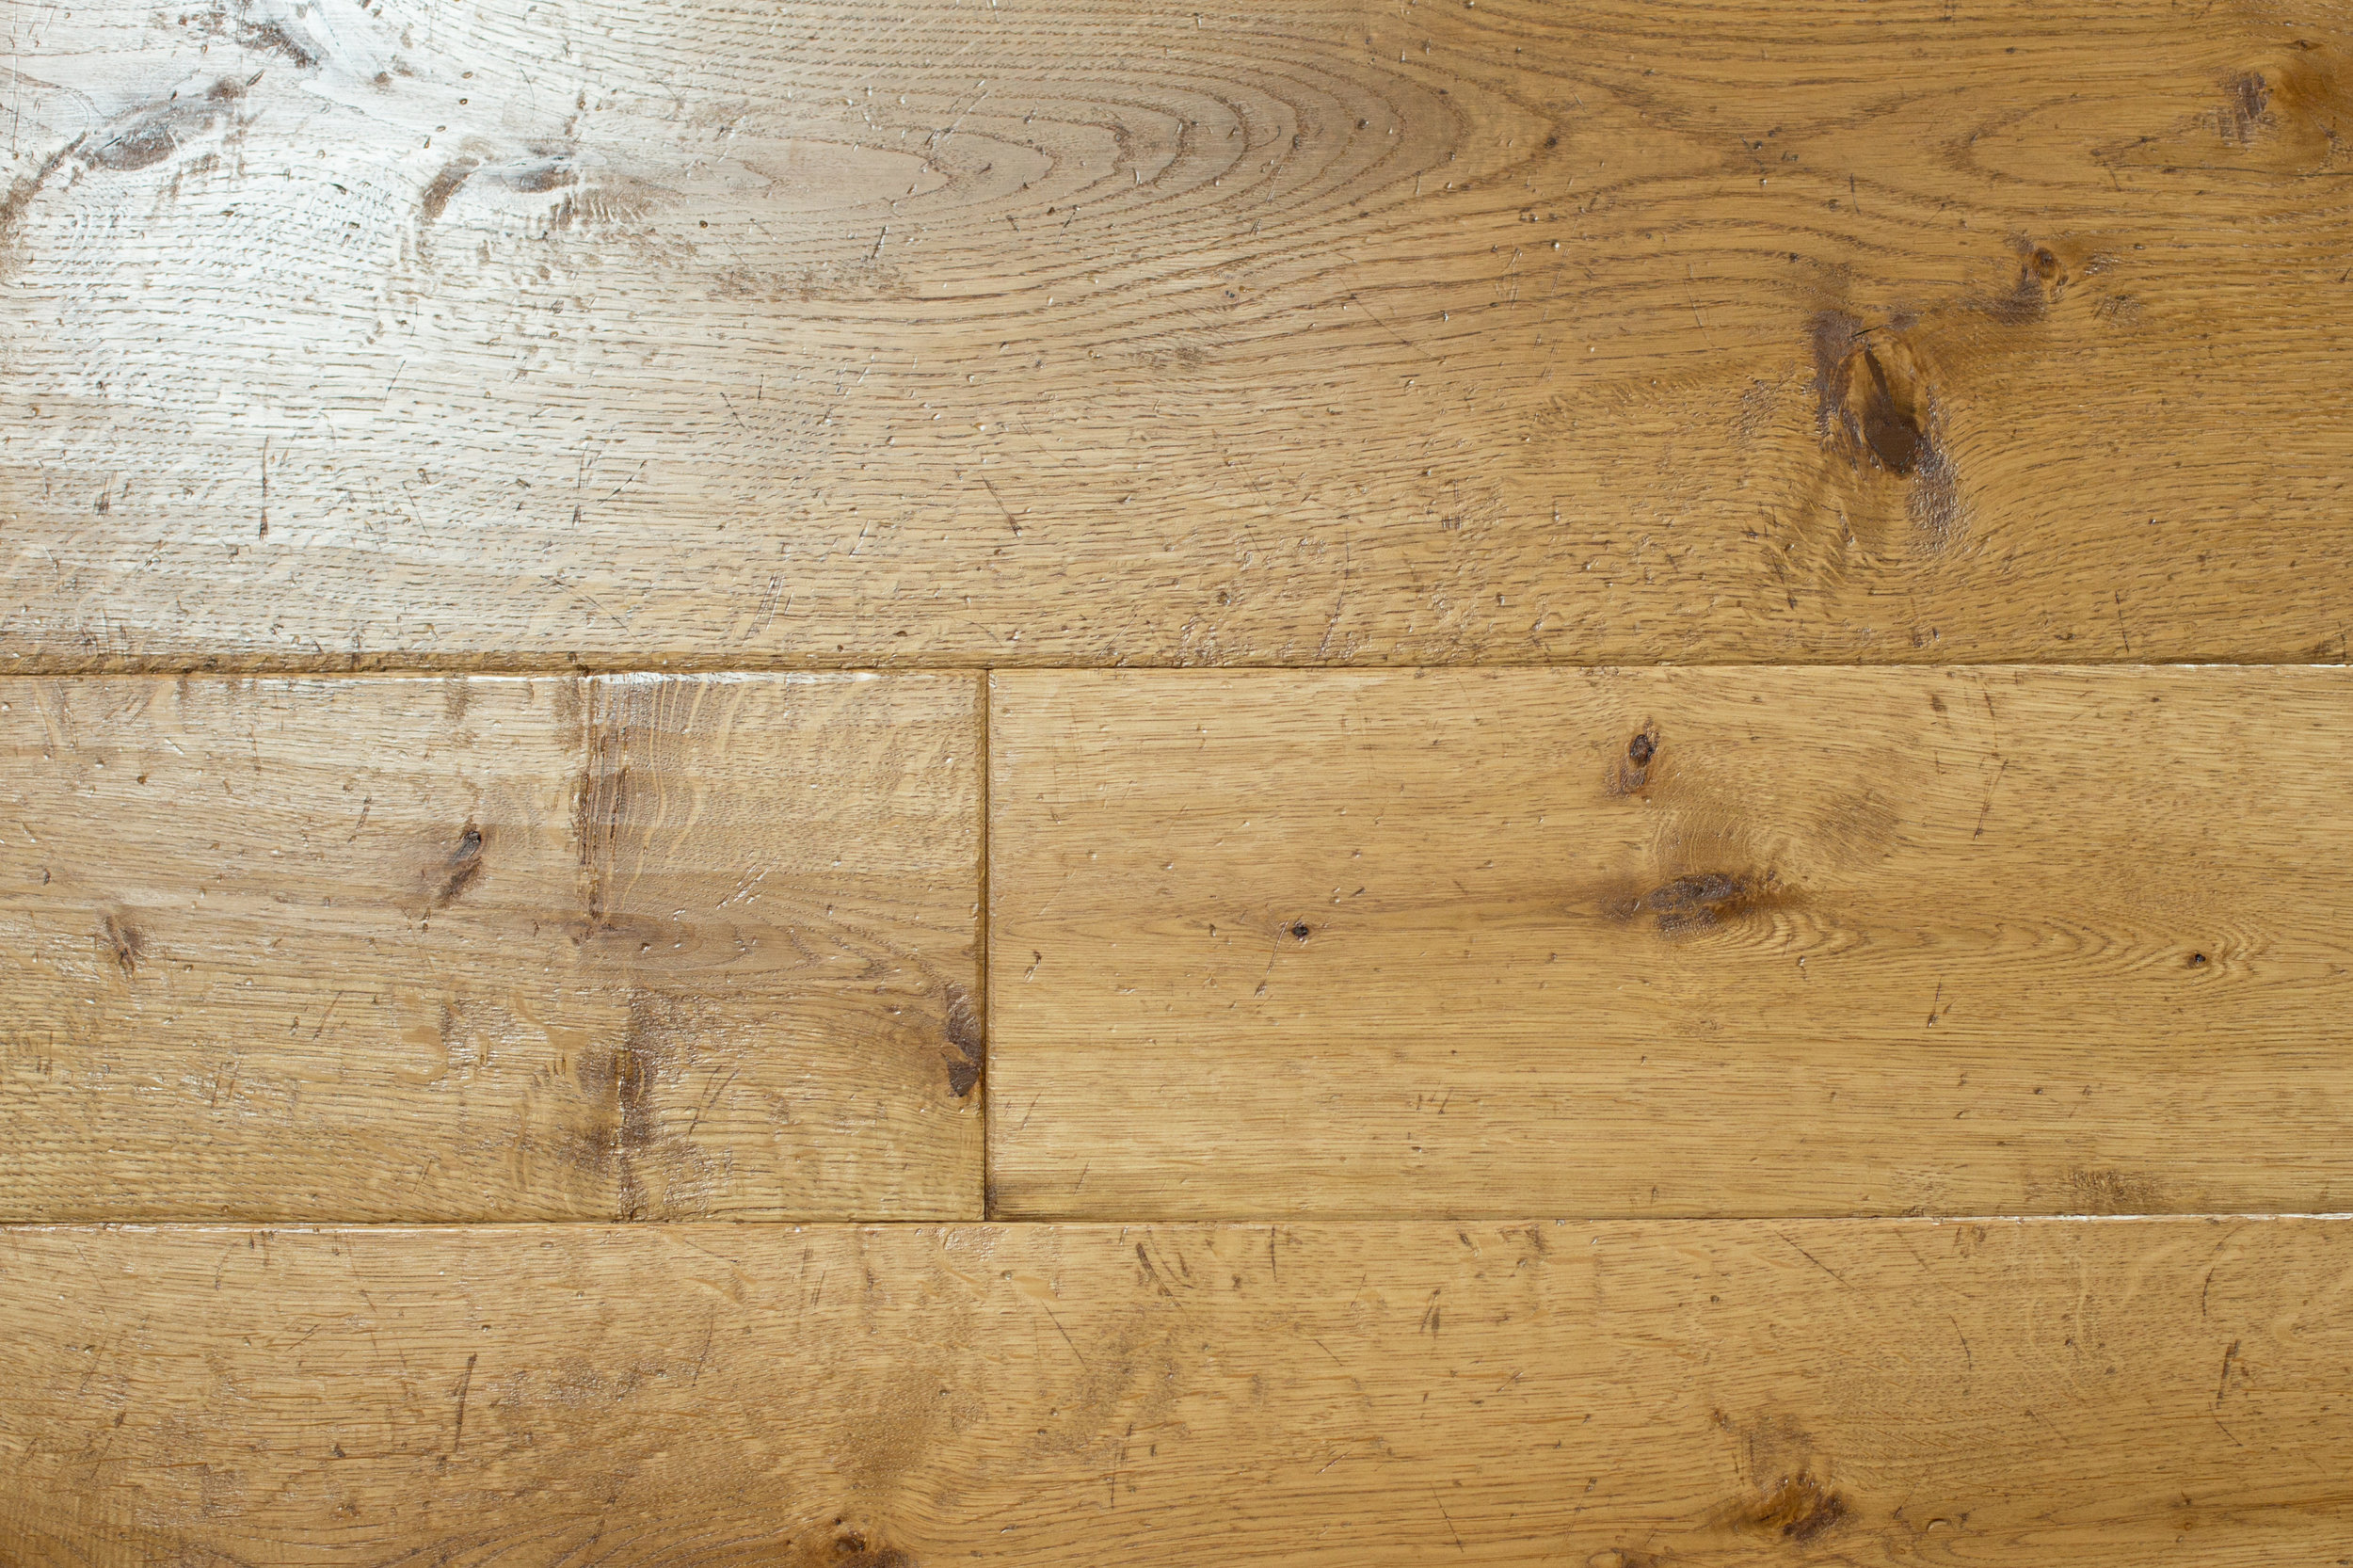 Weathered wood flooring